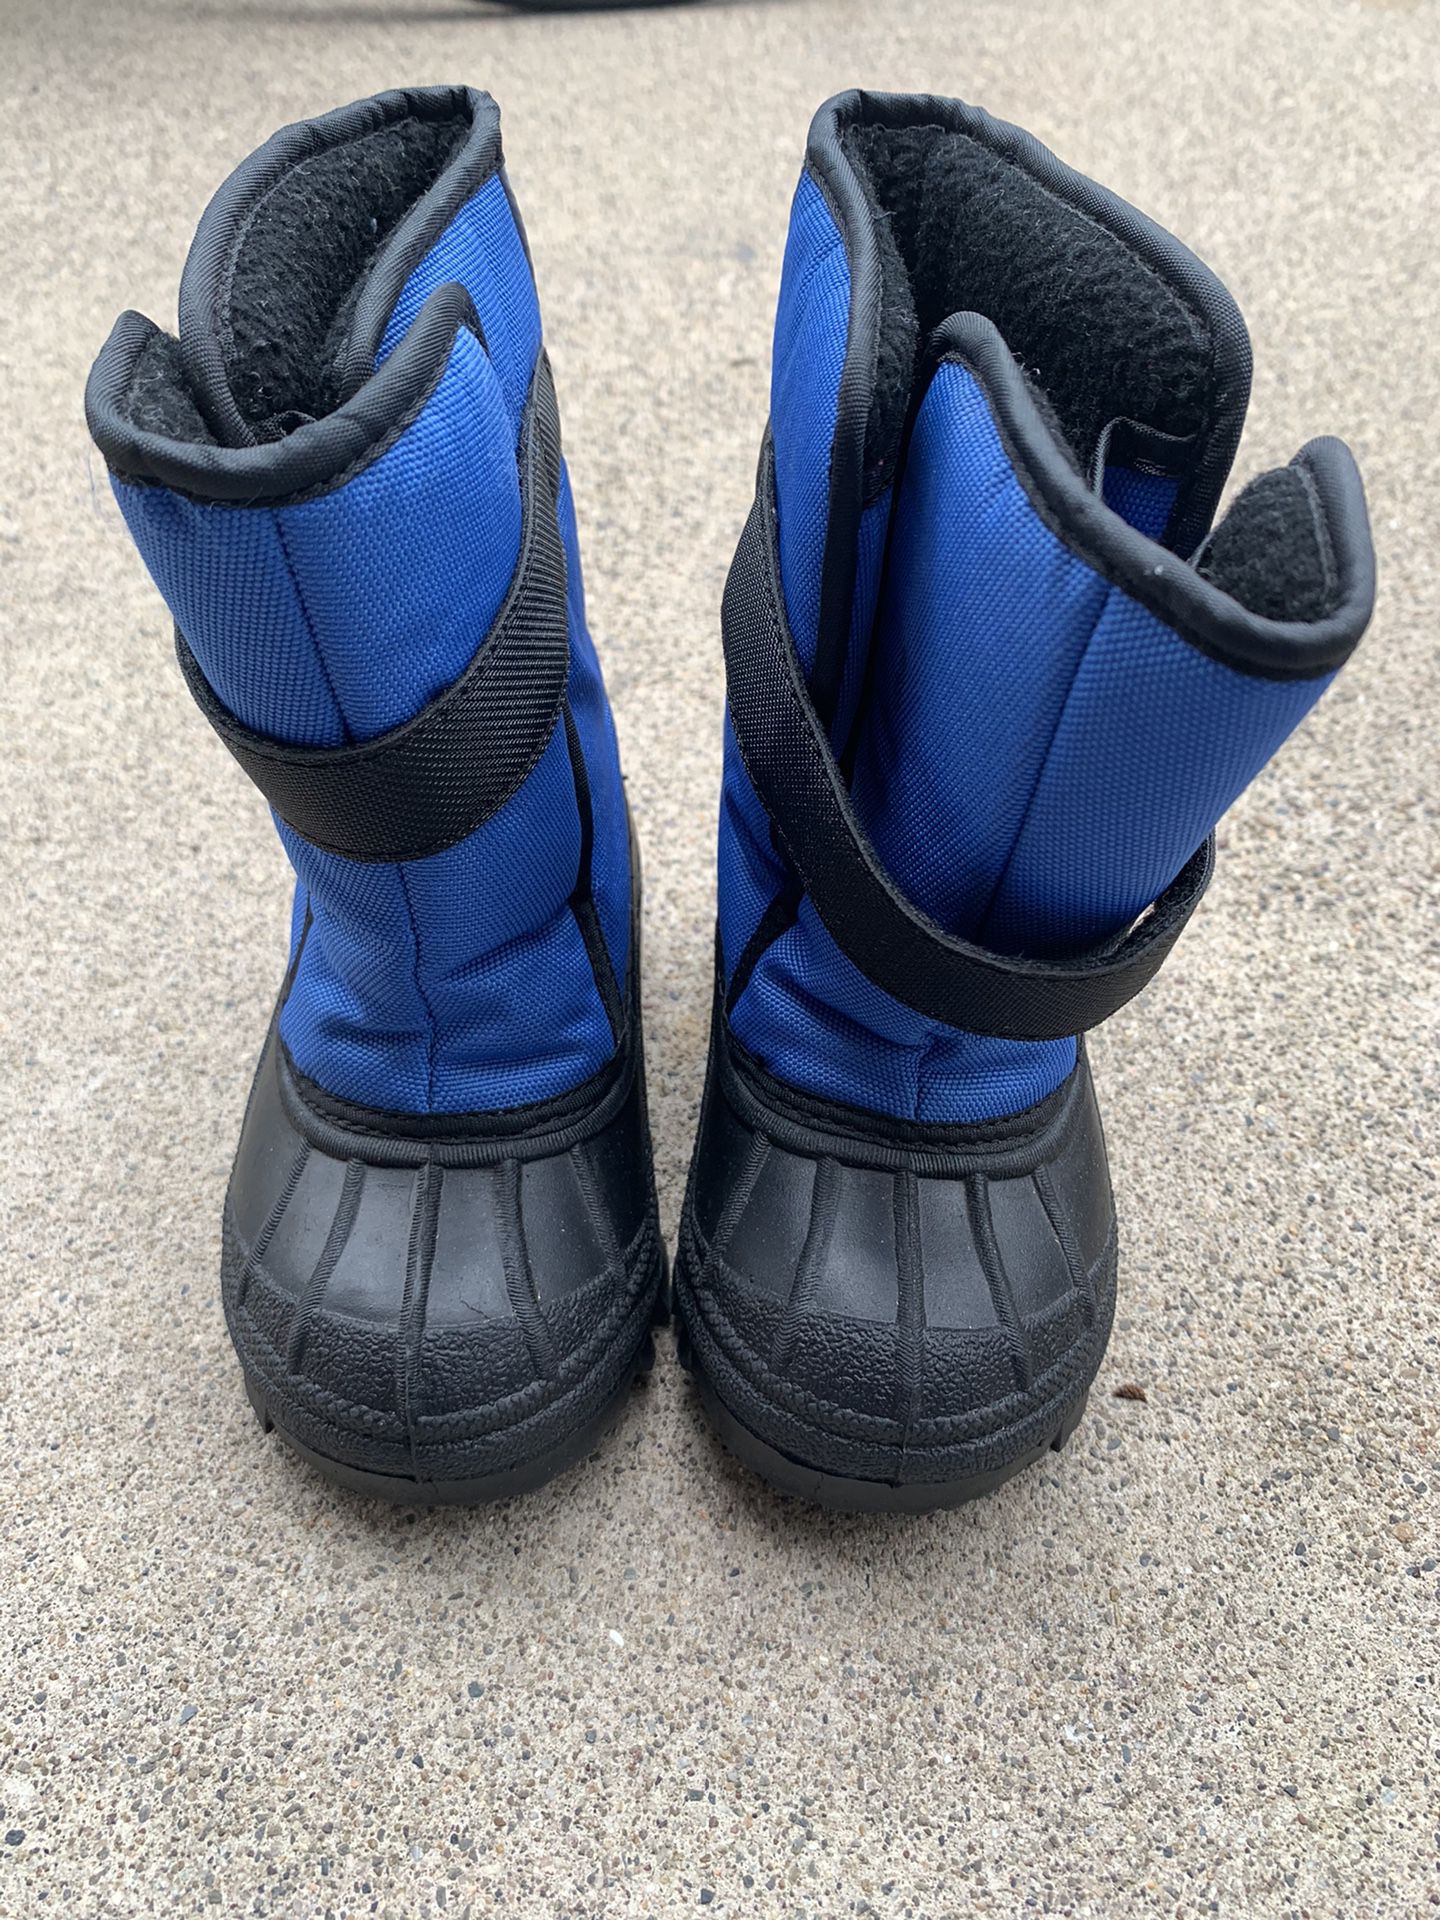 Little Kid Snow Boots size 6